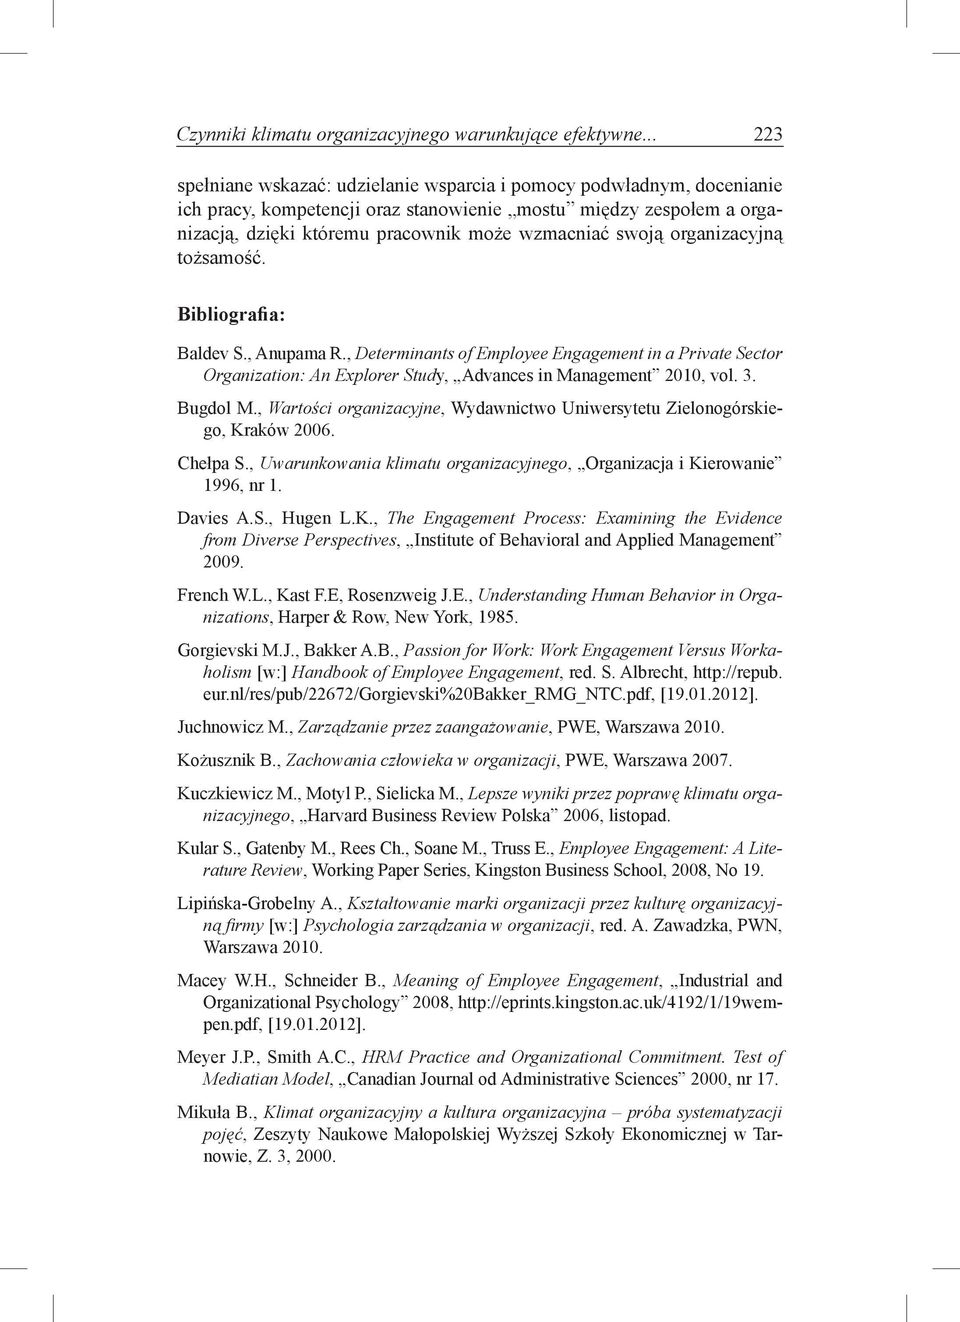 swoją organizacyjną tożsamość. Bibliografia: Baldev S., Anupama R., Determinants of Employee Engagement in a Private Sector Organization: An Explorer Study, Advances in Management 2010, vol. 3.